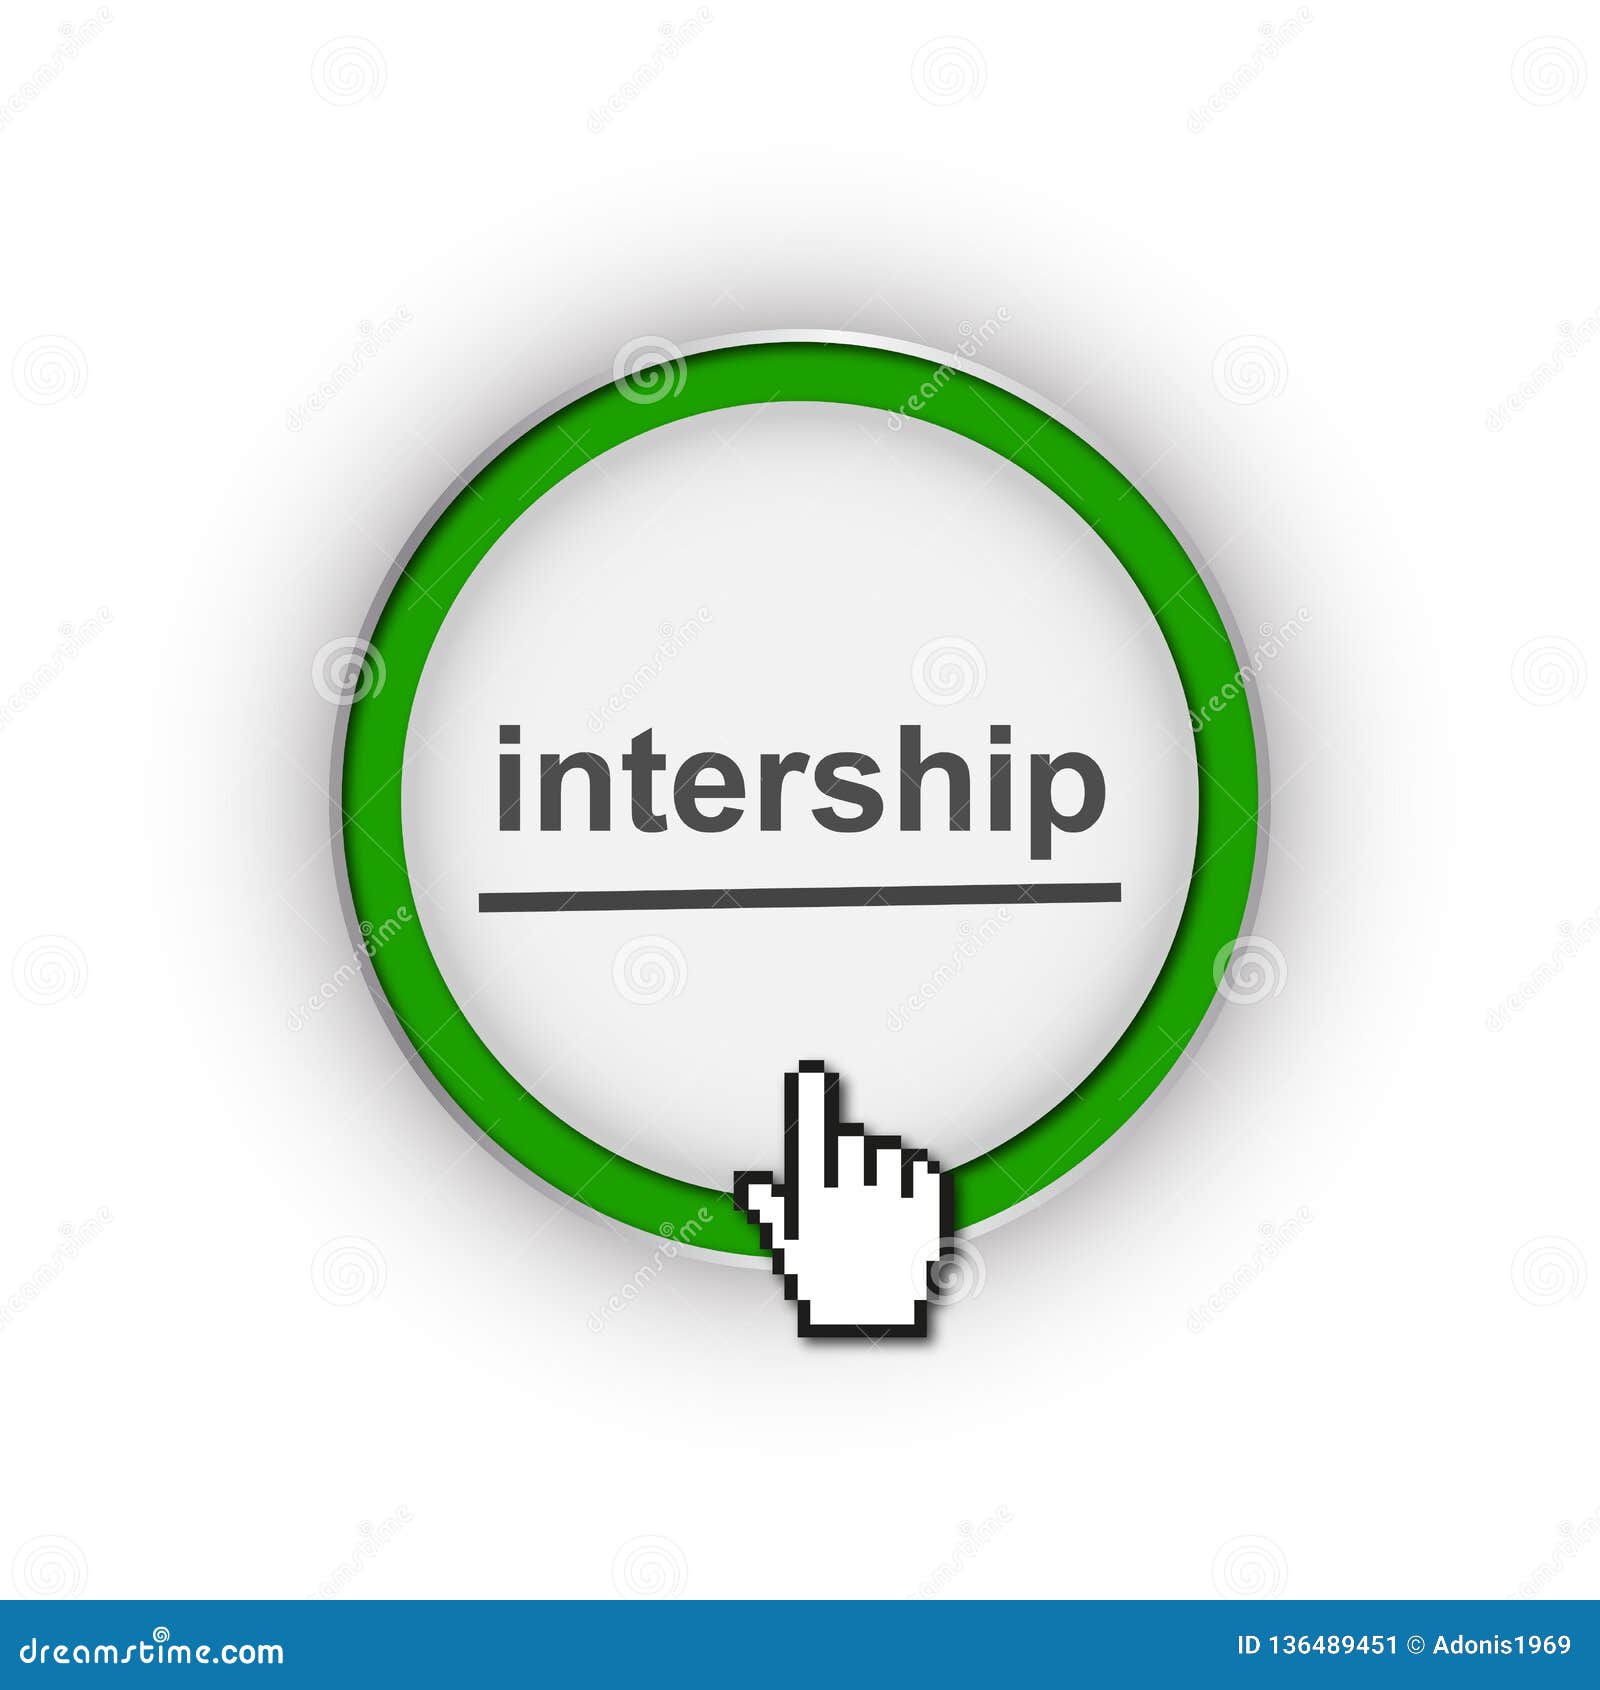 internship icon